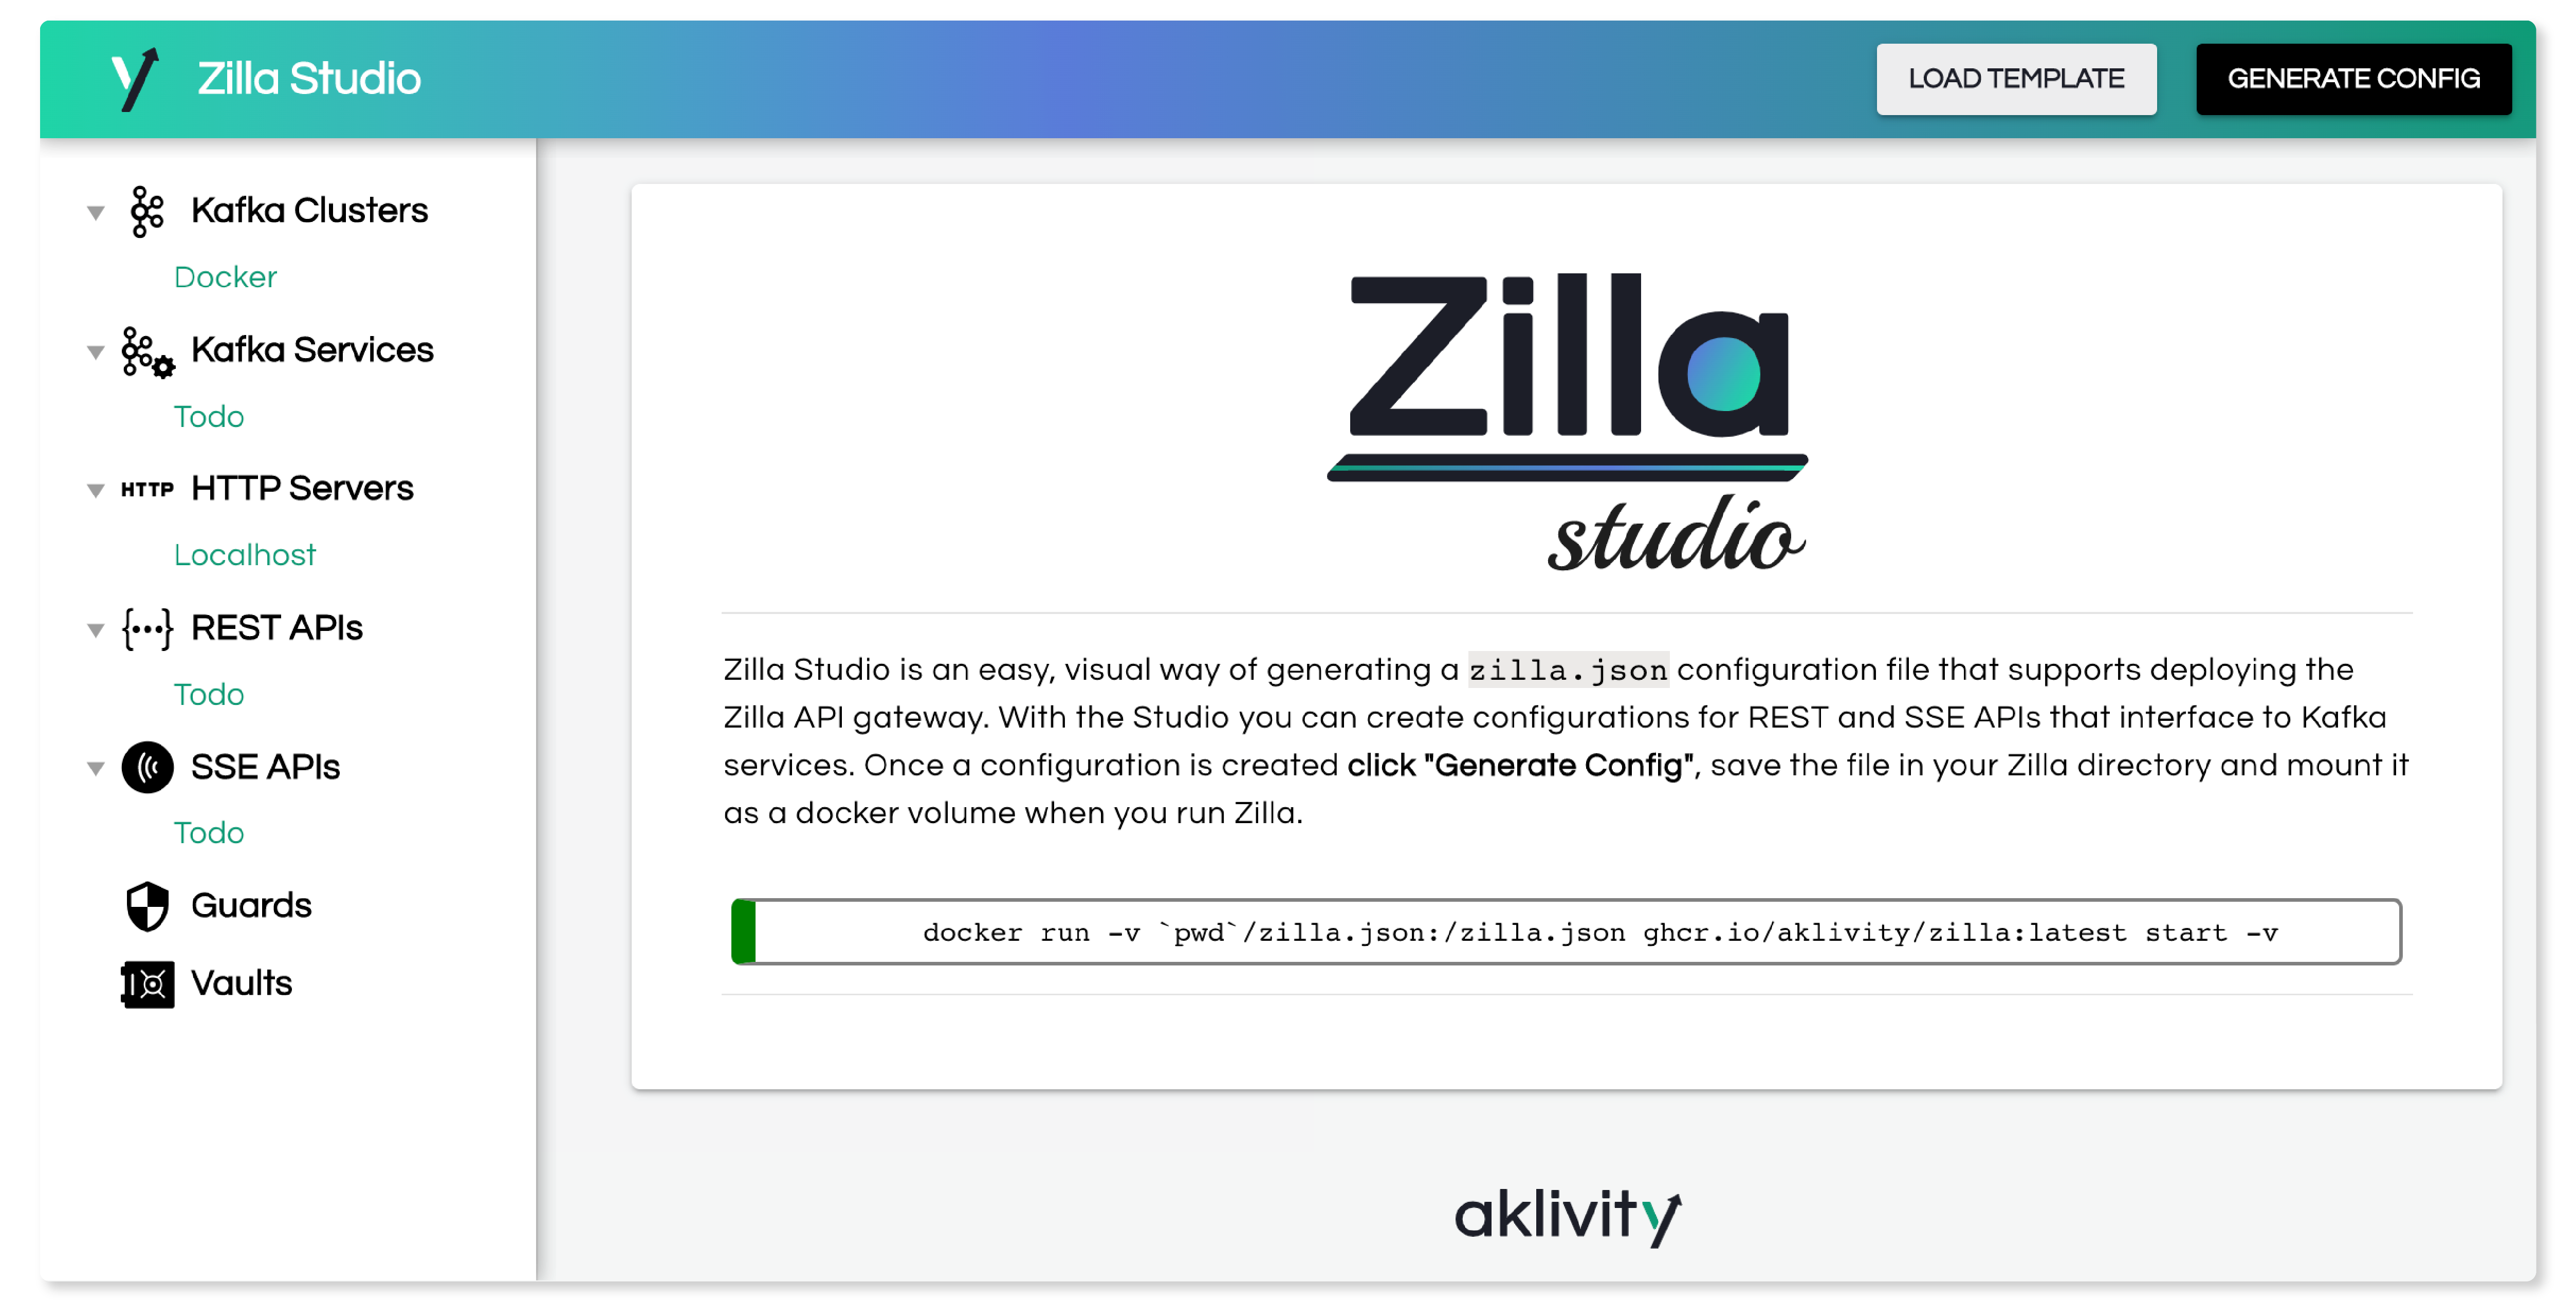 Zilla Studio